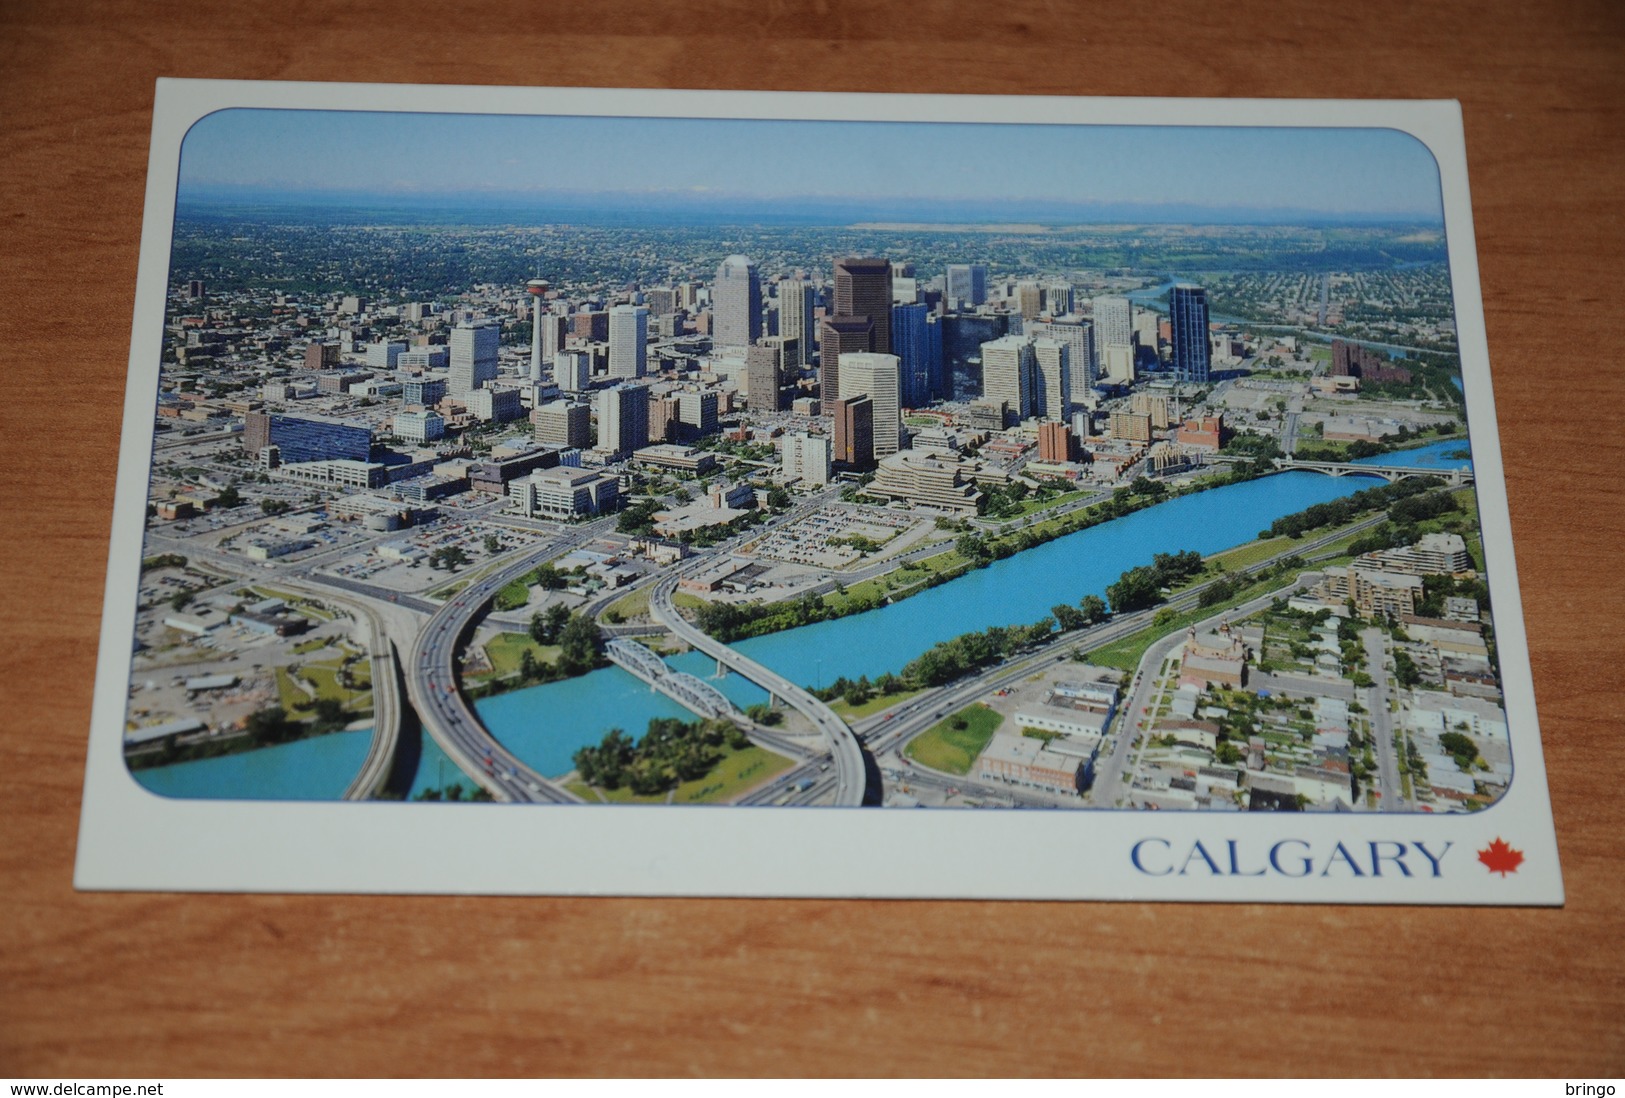 2434-              CANADA - CAGARY - STAMPEDE CITY - Calgary